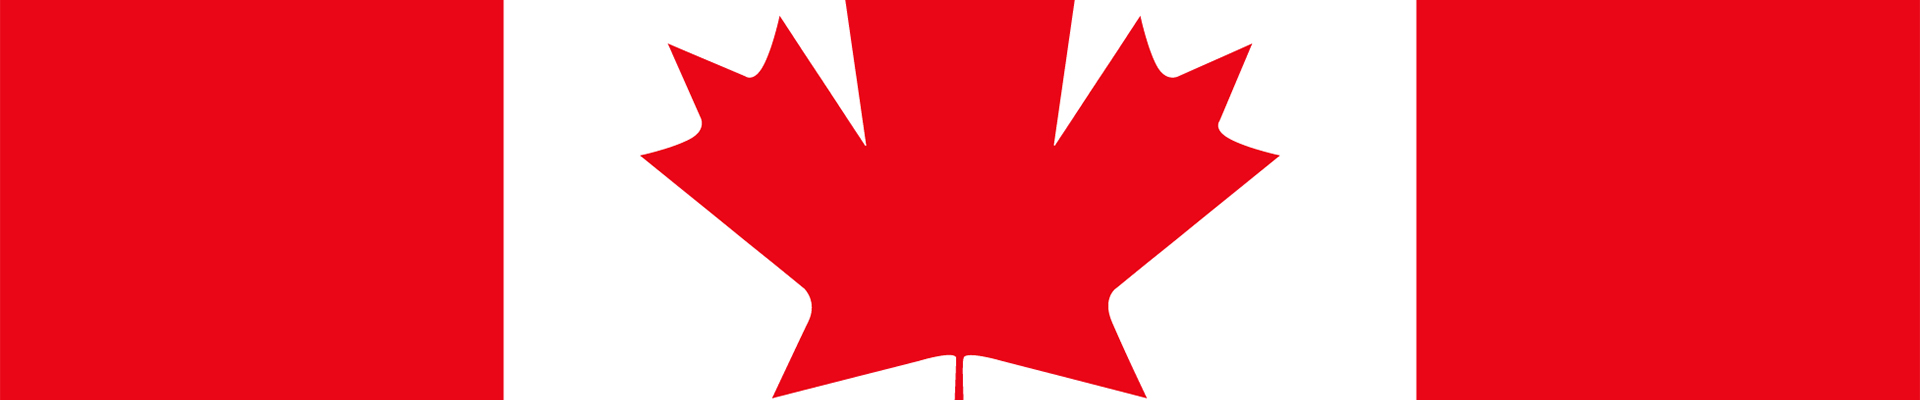 Djokovic vs Ruud diffusion en direct – drapeau Canada